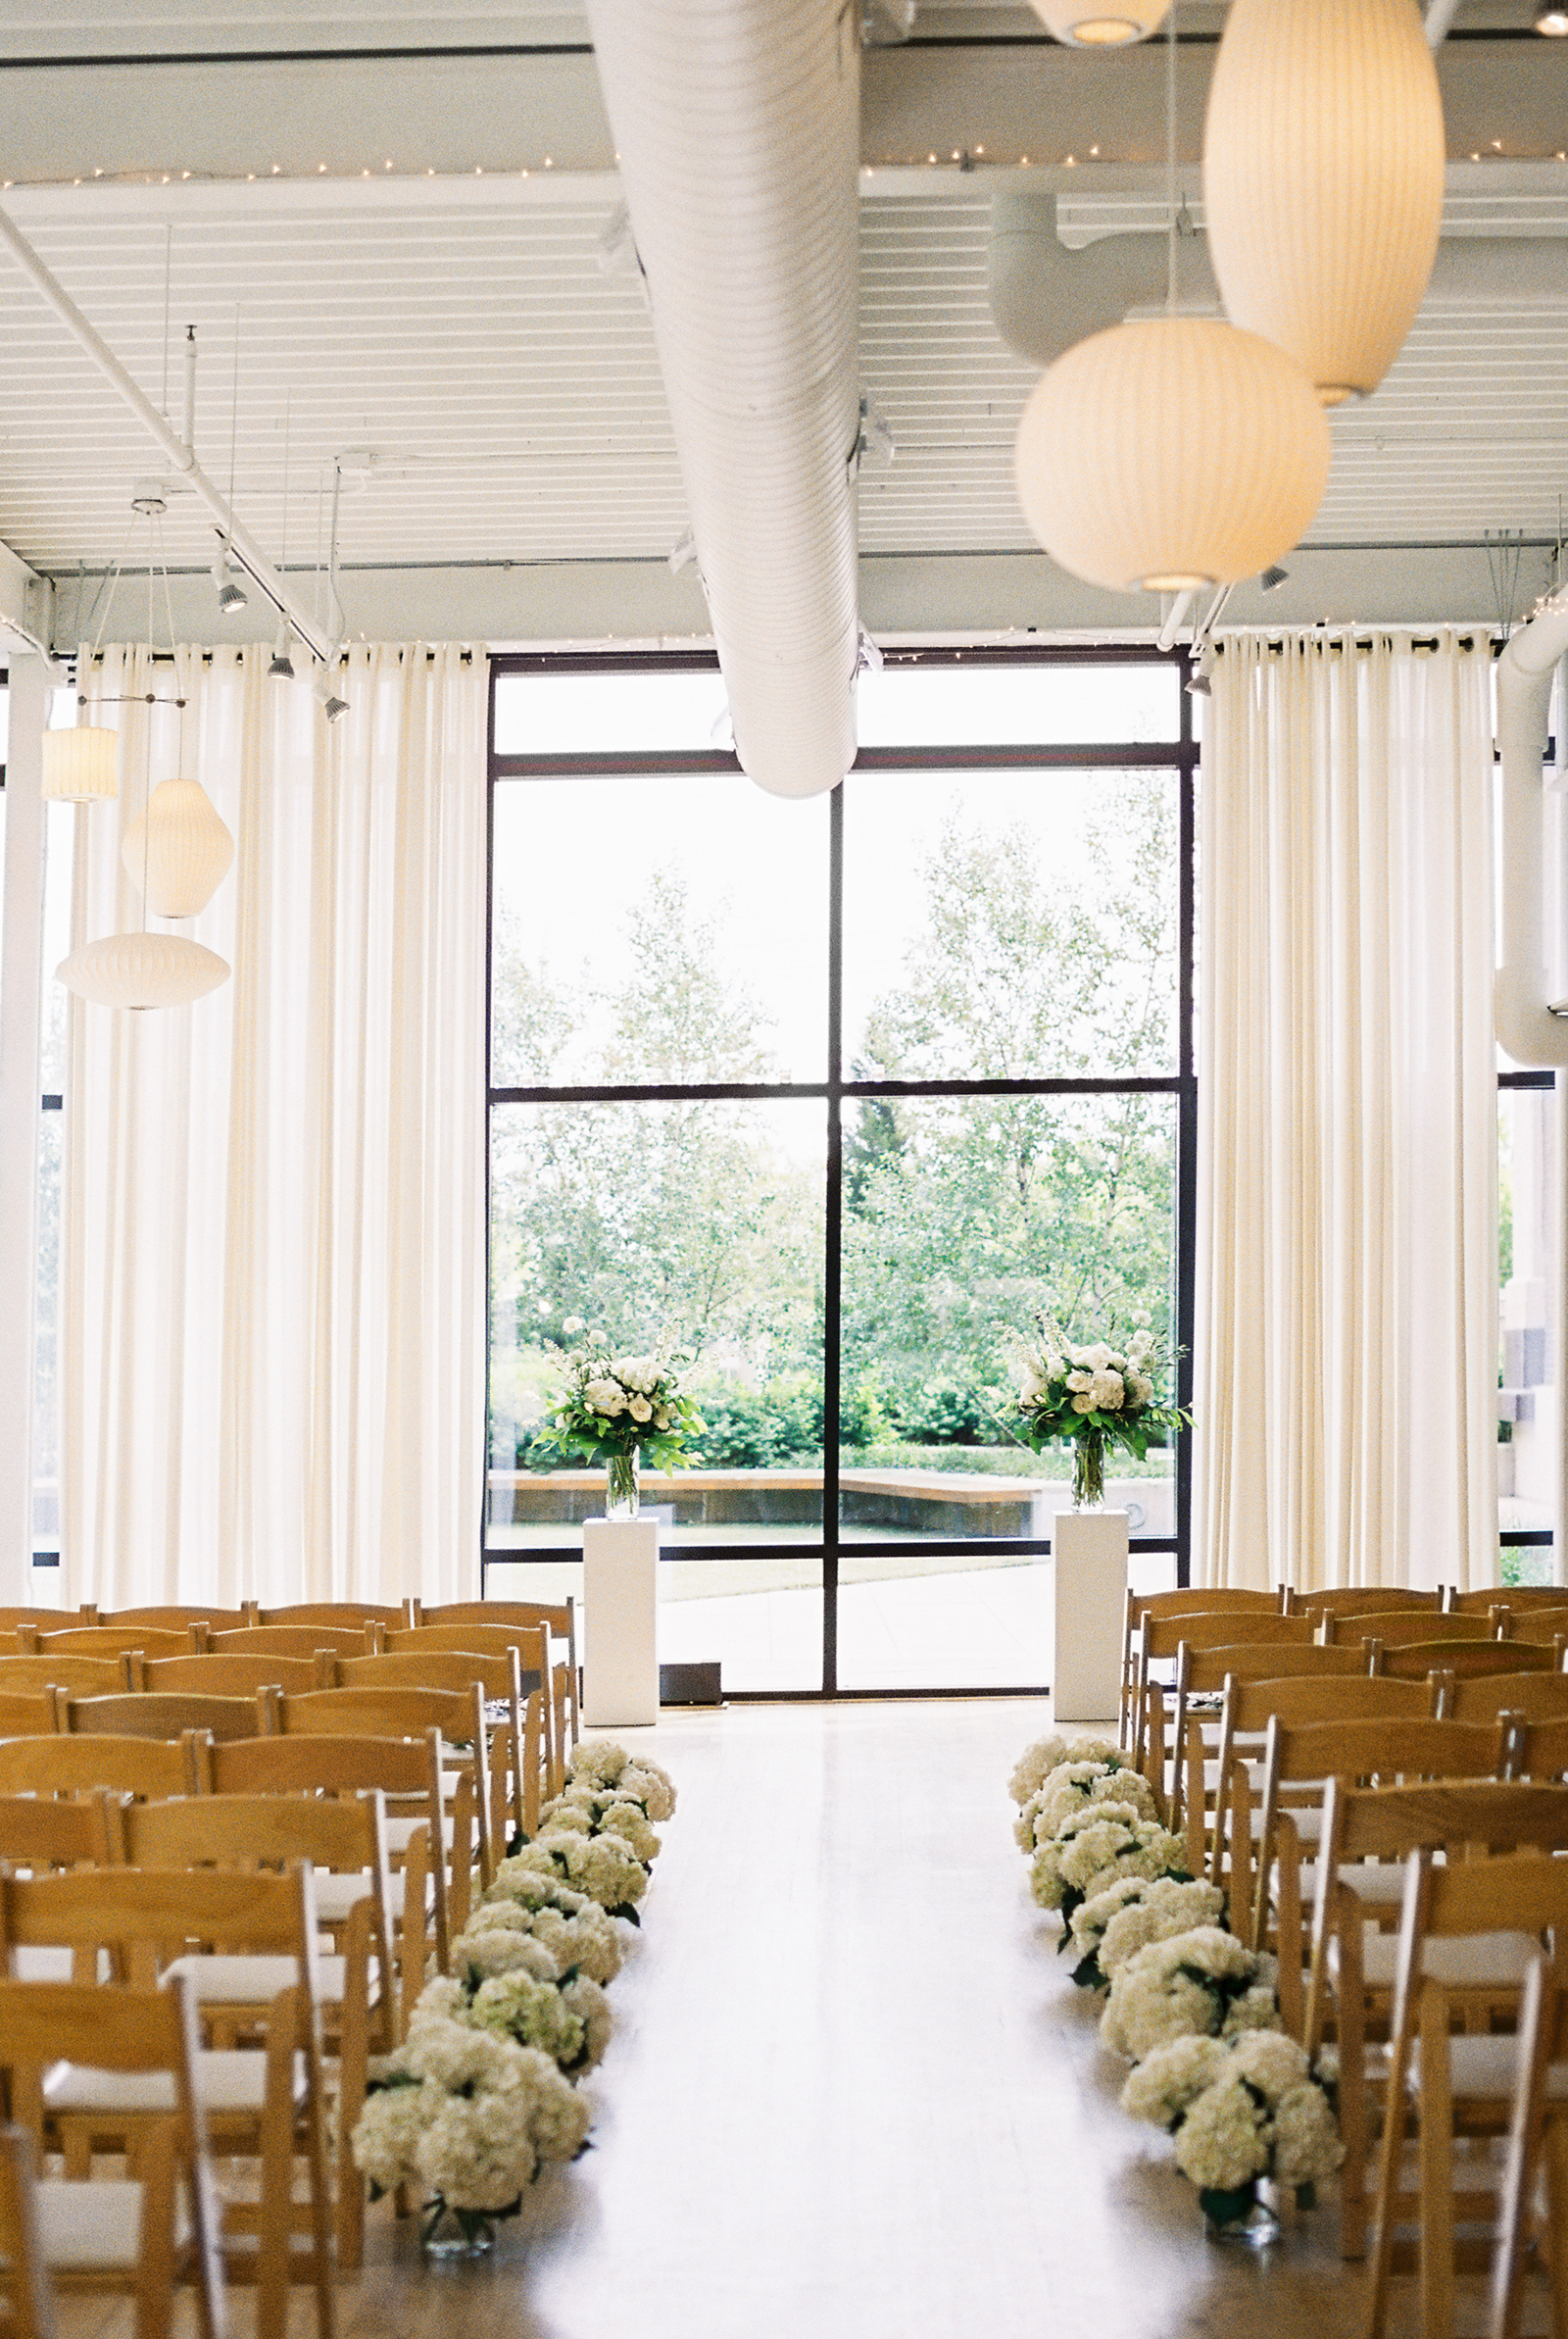 Minimalist and monochromatic Greenhouse Loft wedding ceremony with white hydrangea and altar flowers.